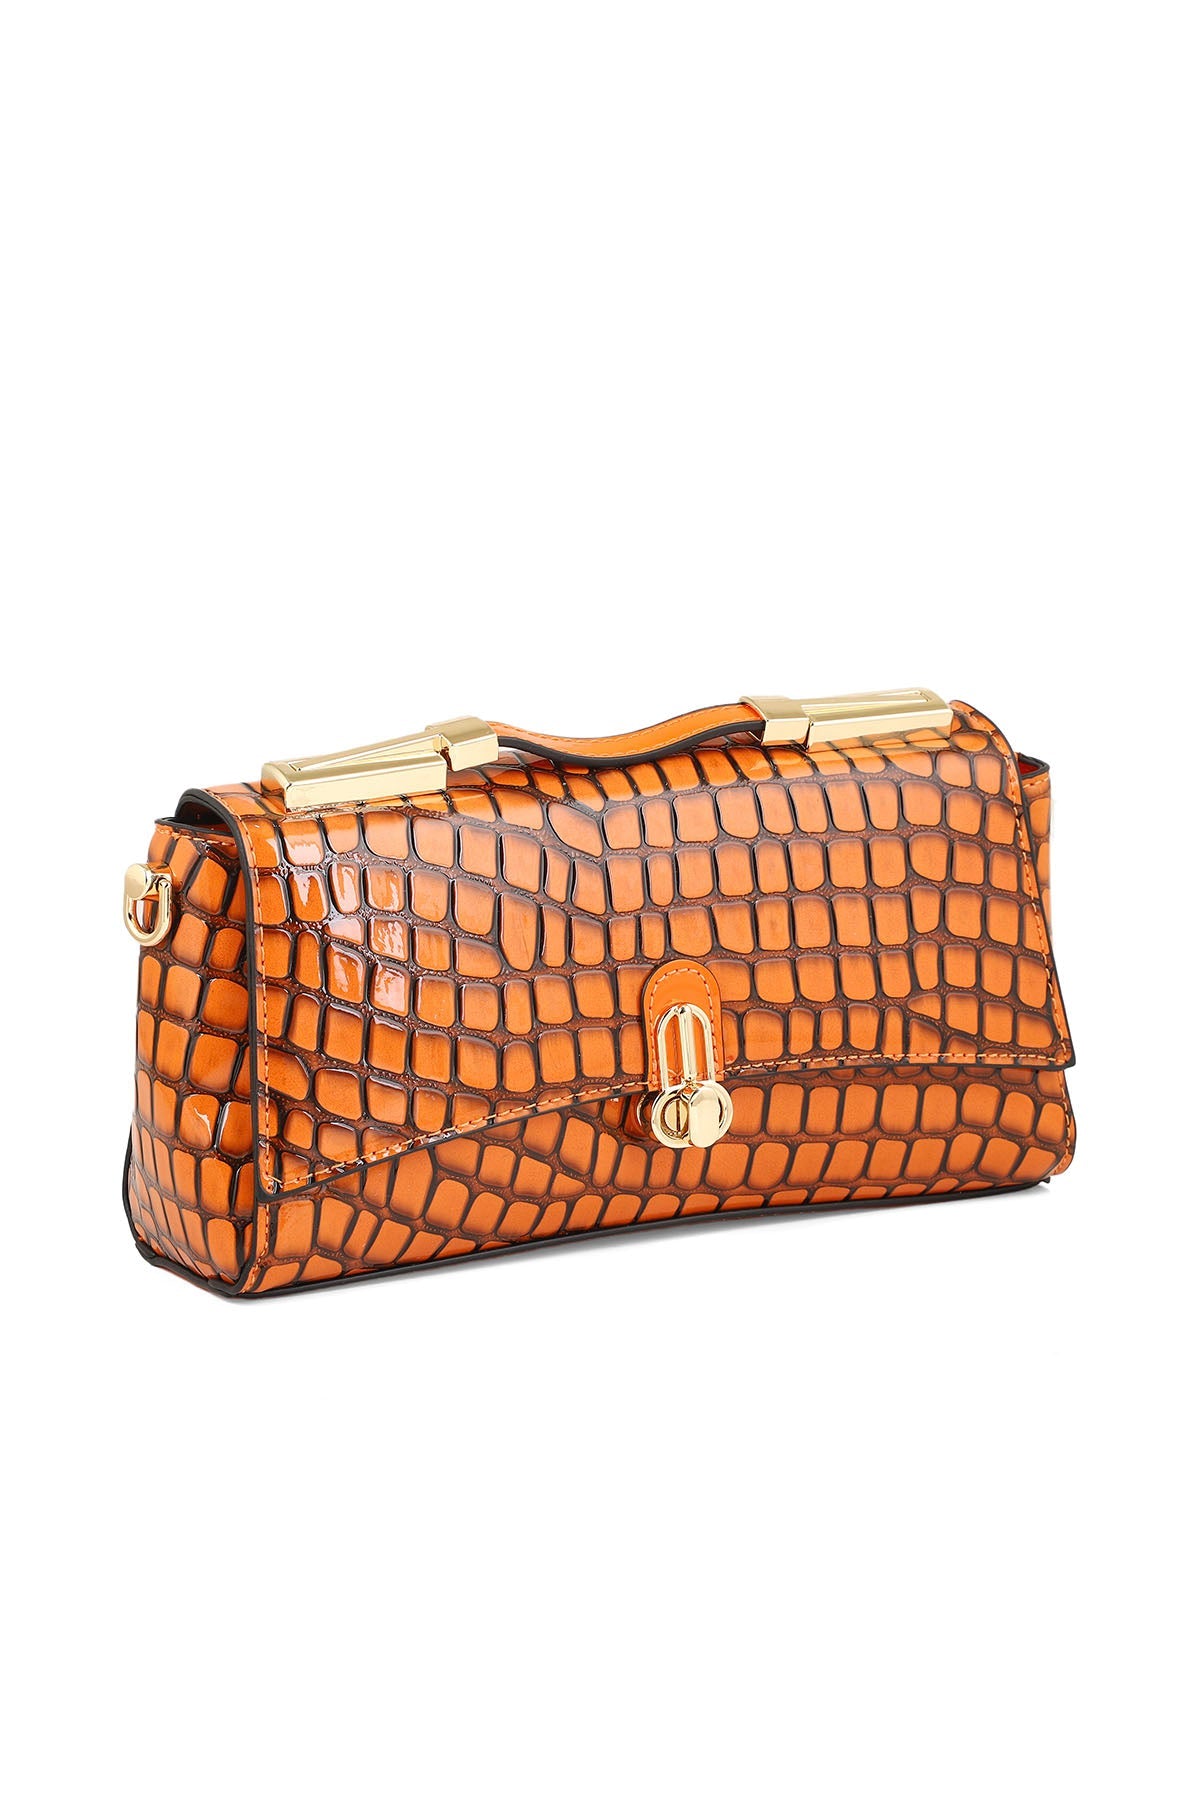 Top Handle Hand Bags B15078-Orange